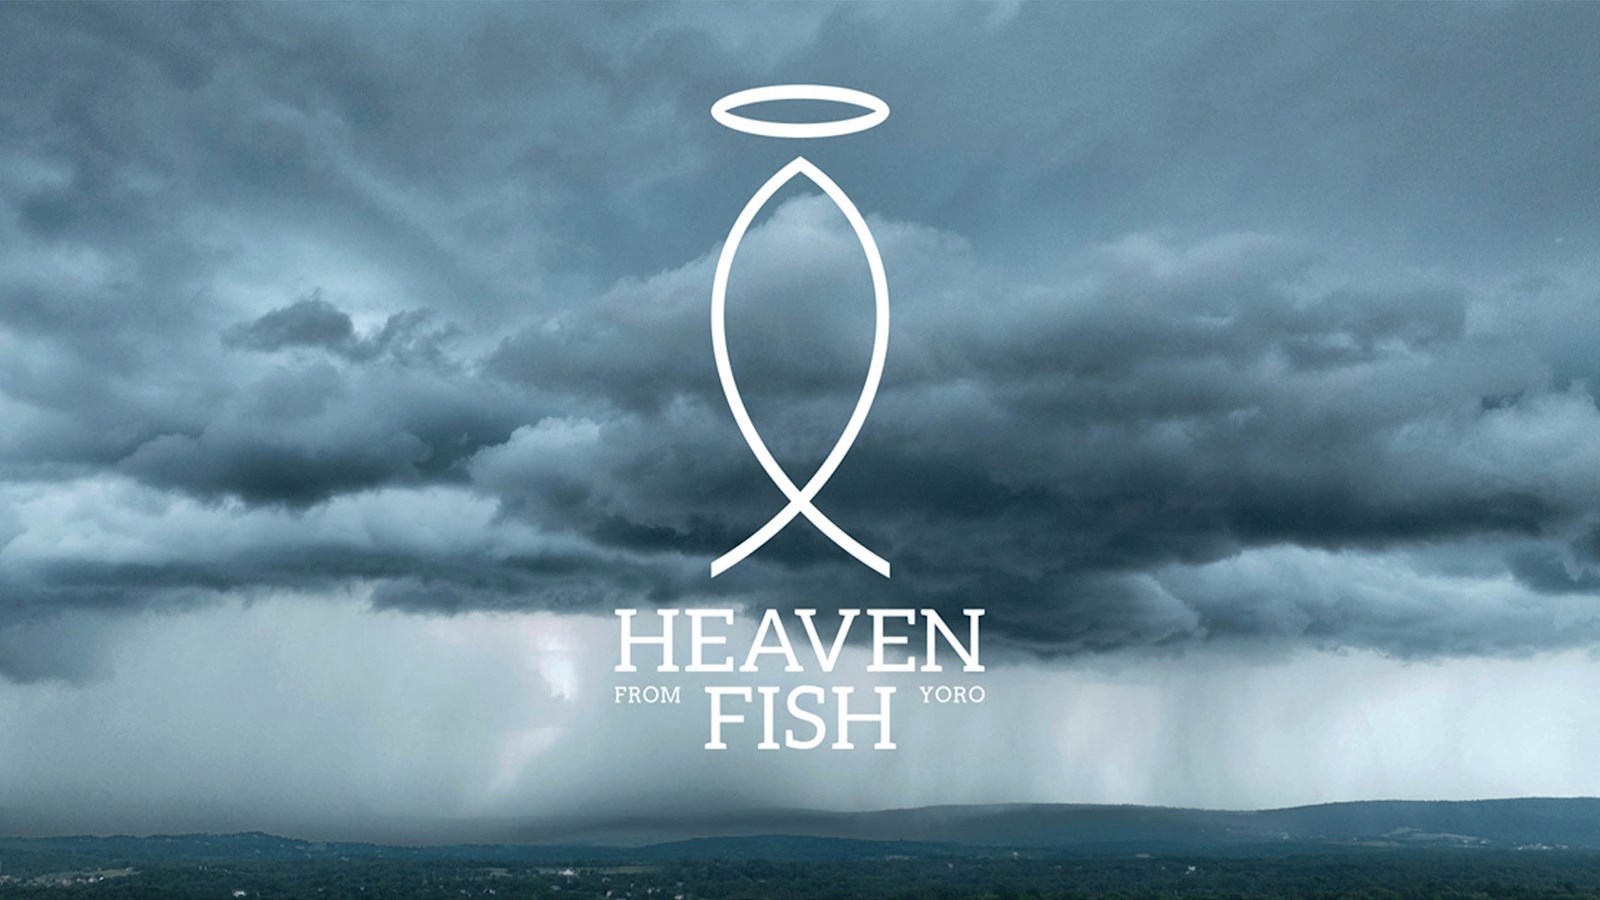 Heaven Fish Logo